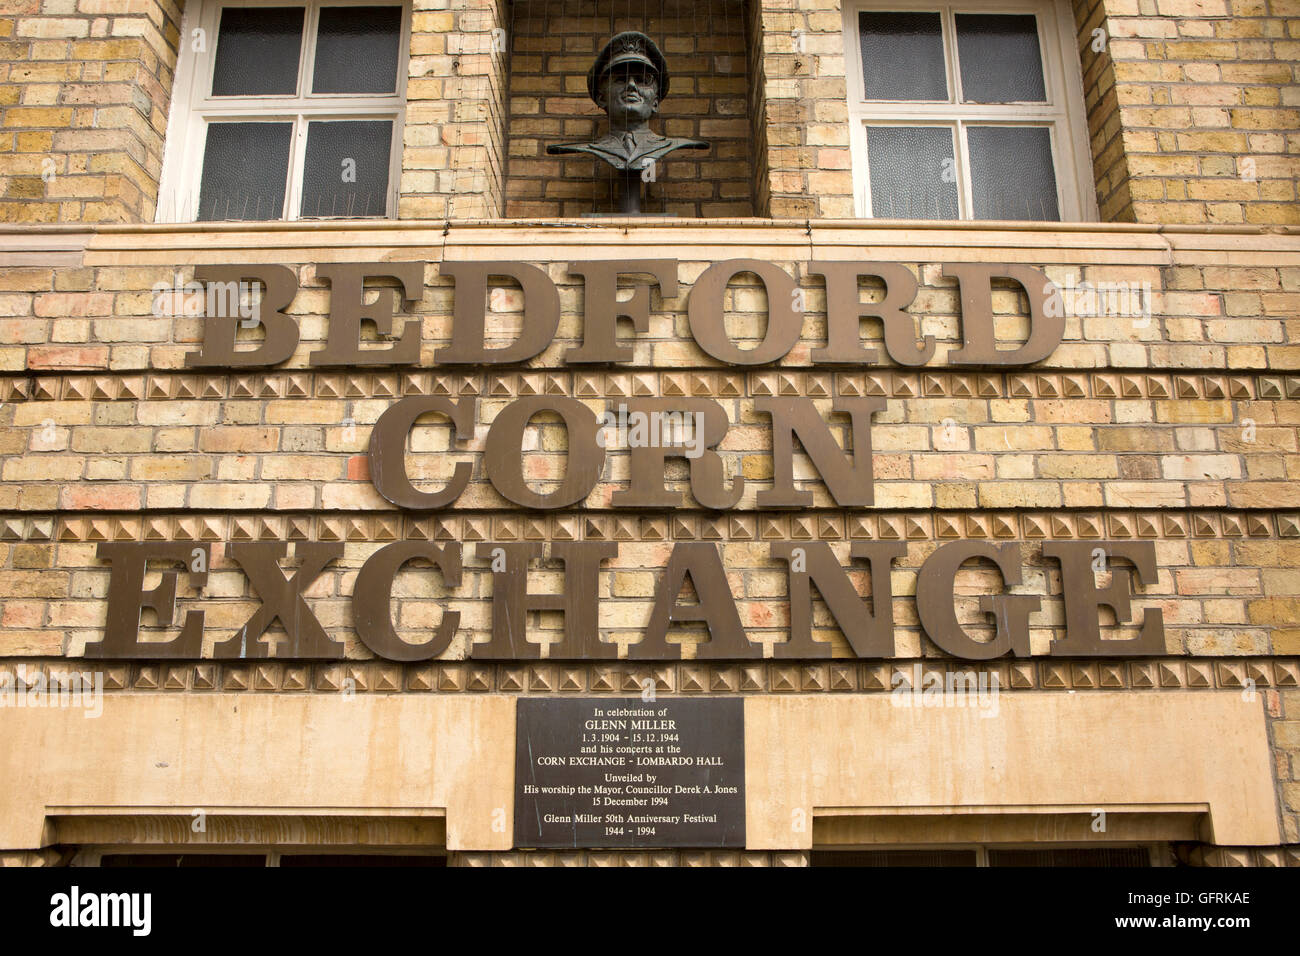 UK, England, Bedfordshire, Bedford, St Paul’s Square, Corn Exchange Building, Lombardo Hall, Glenn Miller bust Stock Photo